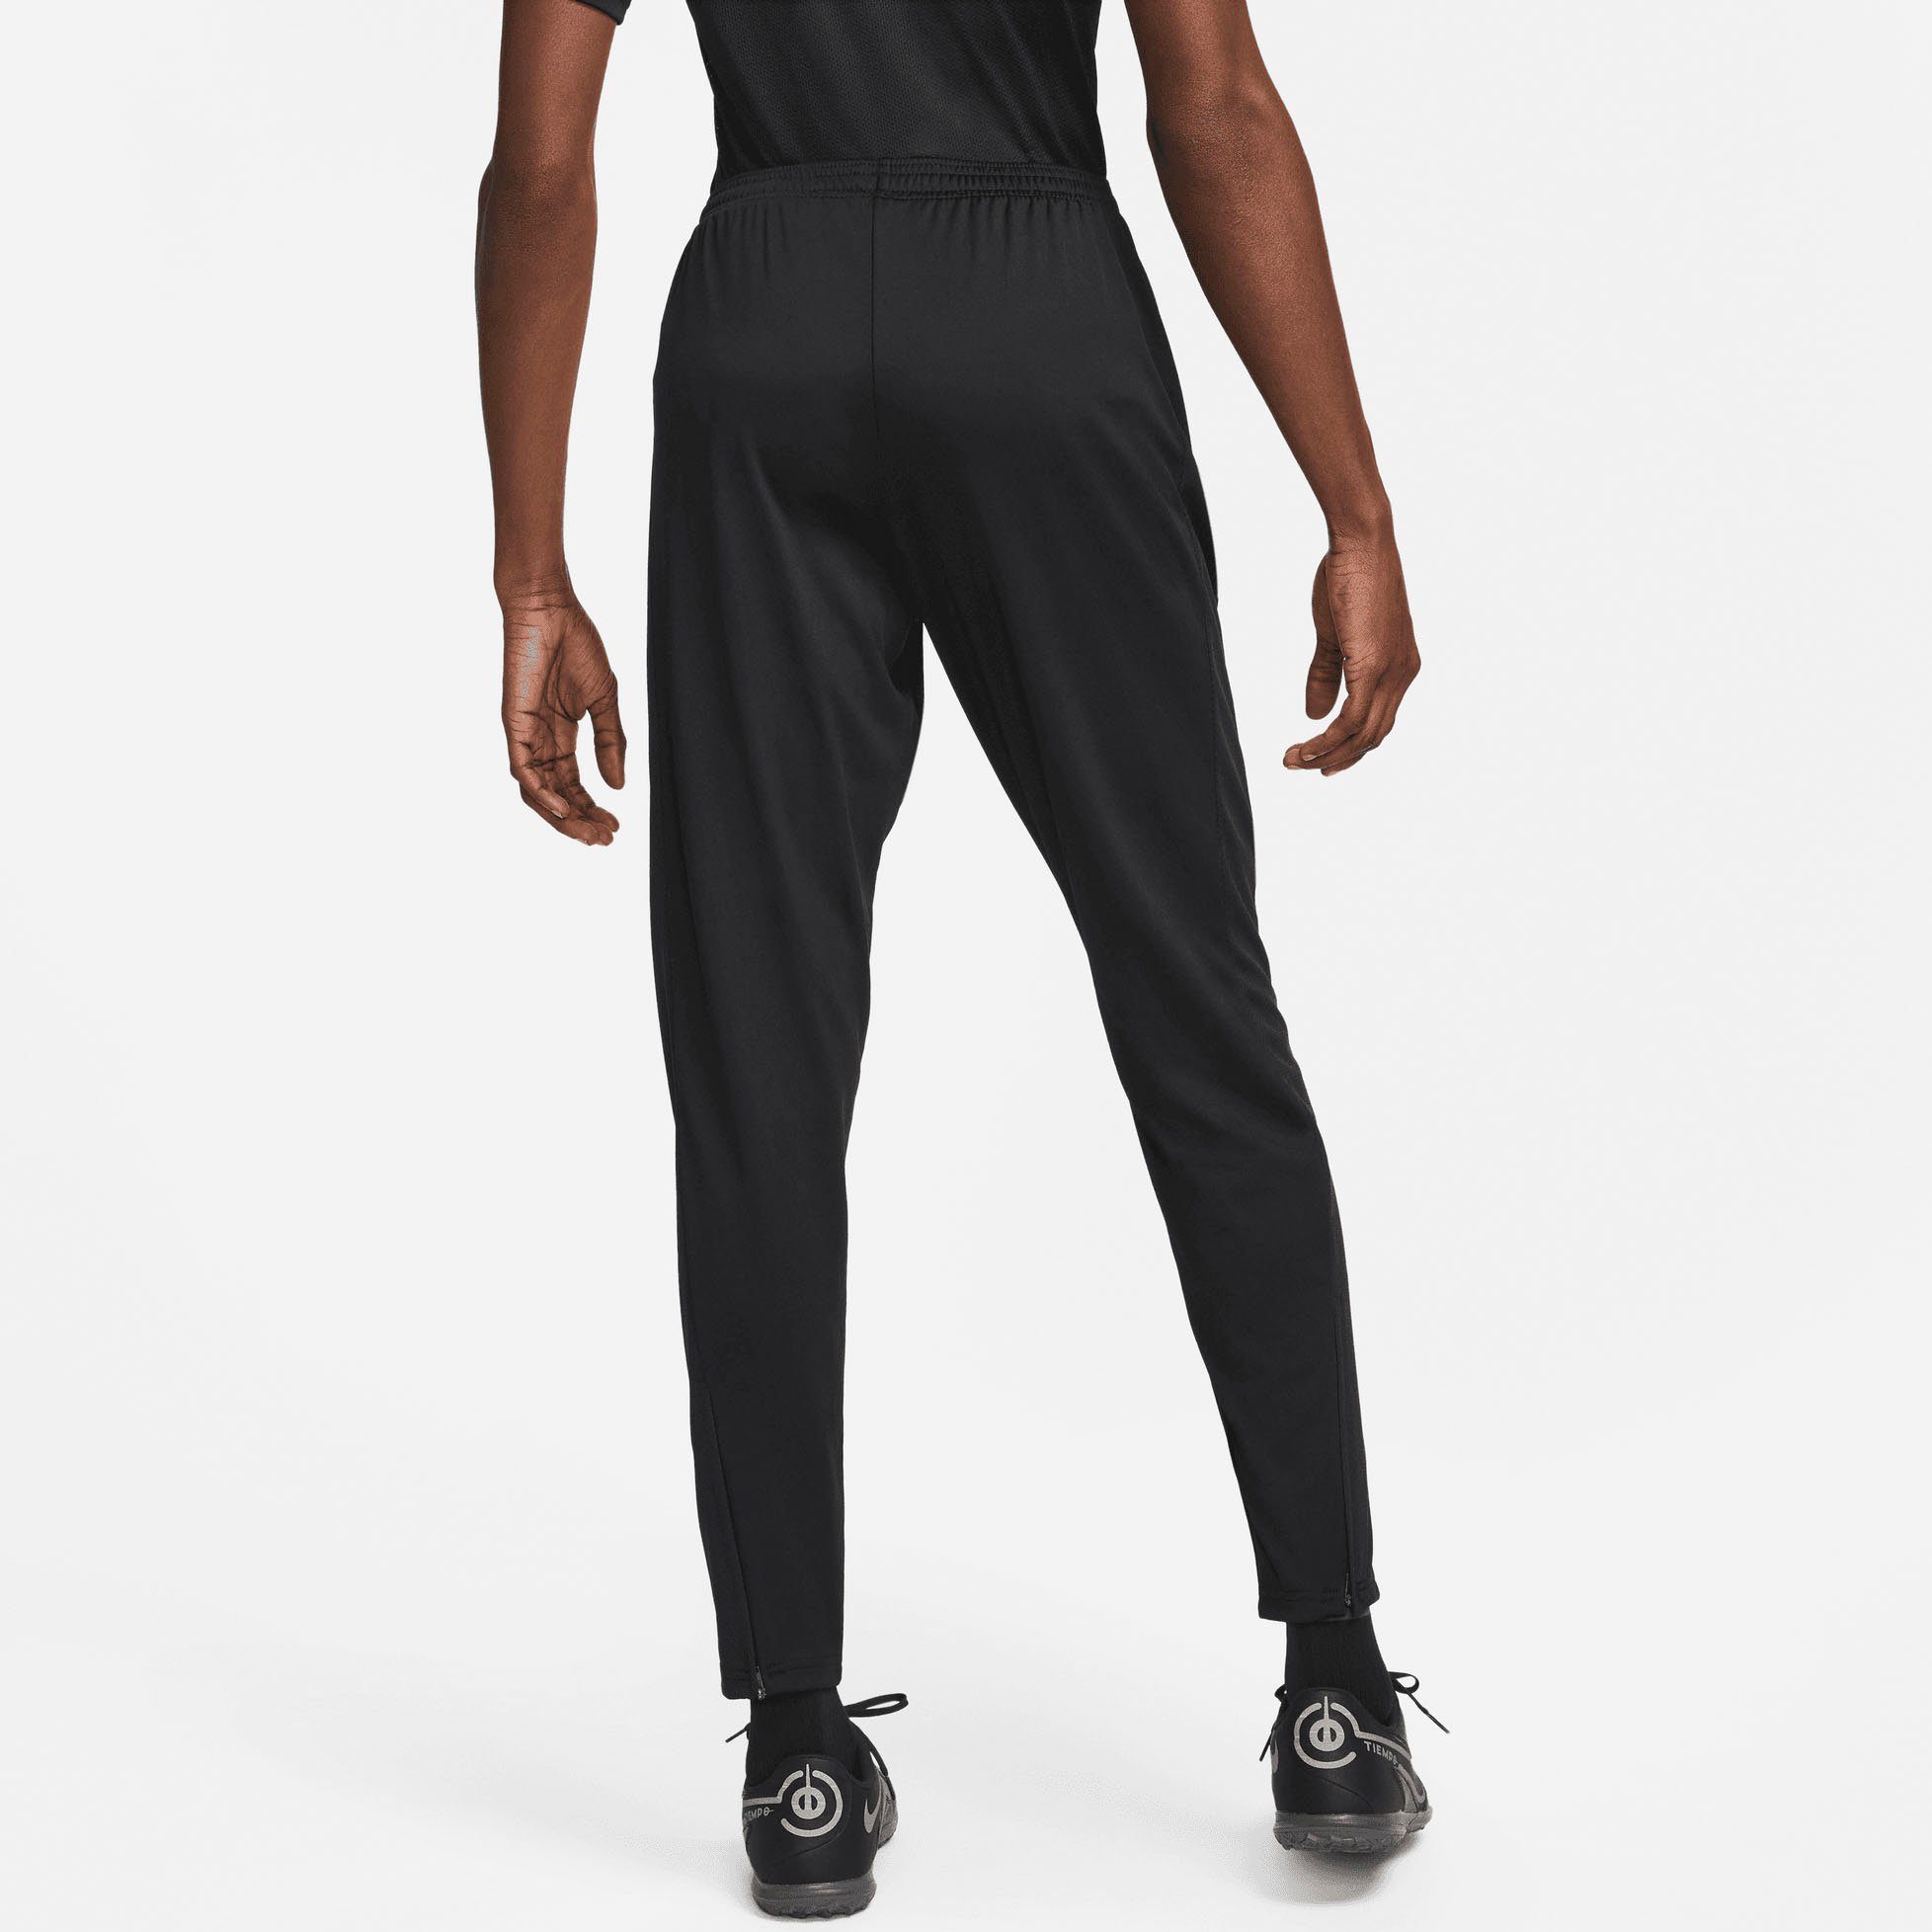 Academy Nike Men's Zippered Dri-FIT Pants BLACK/BLACK/BLACK/WHITE Trainingshose Soccer